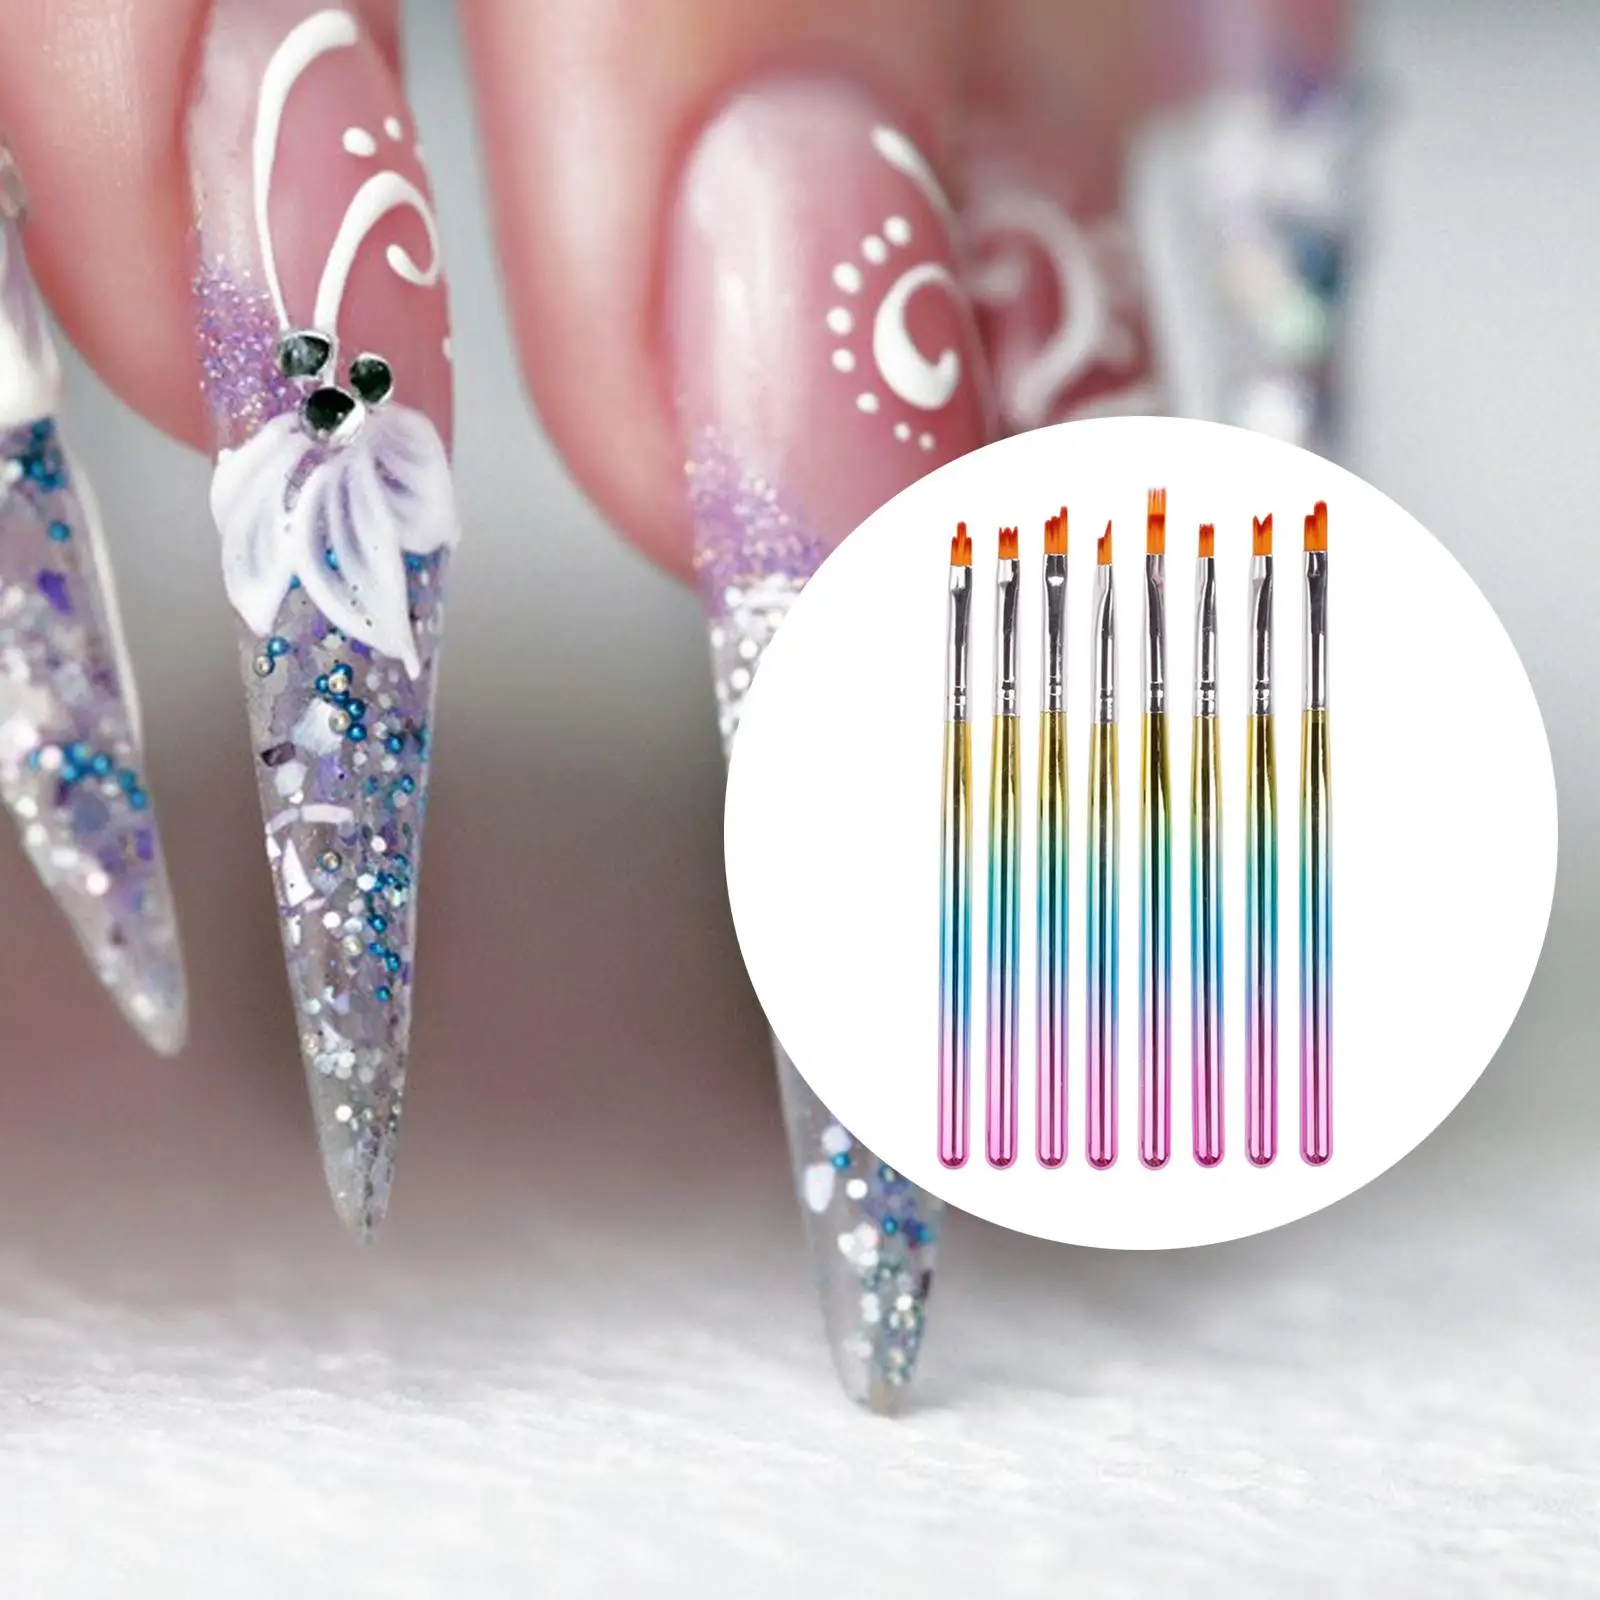 8 Pieces Nail Art Brush Pen Striped Pattern 3D Flower Drawing UV Gel Painting Pen for Professional Salons Beginner Girls